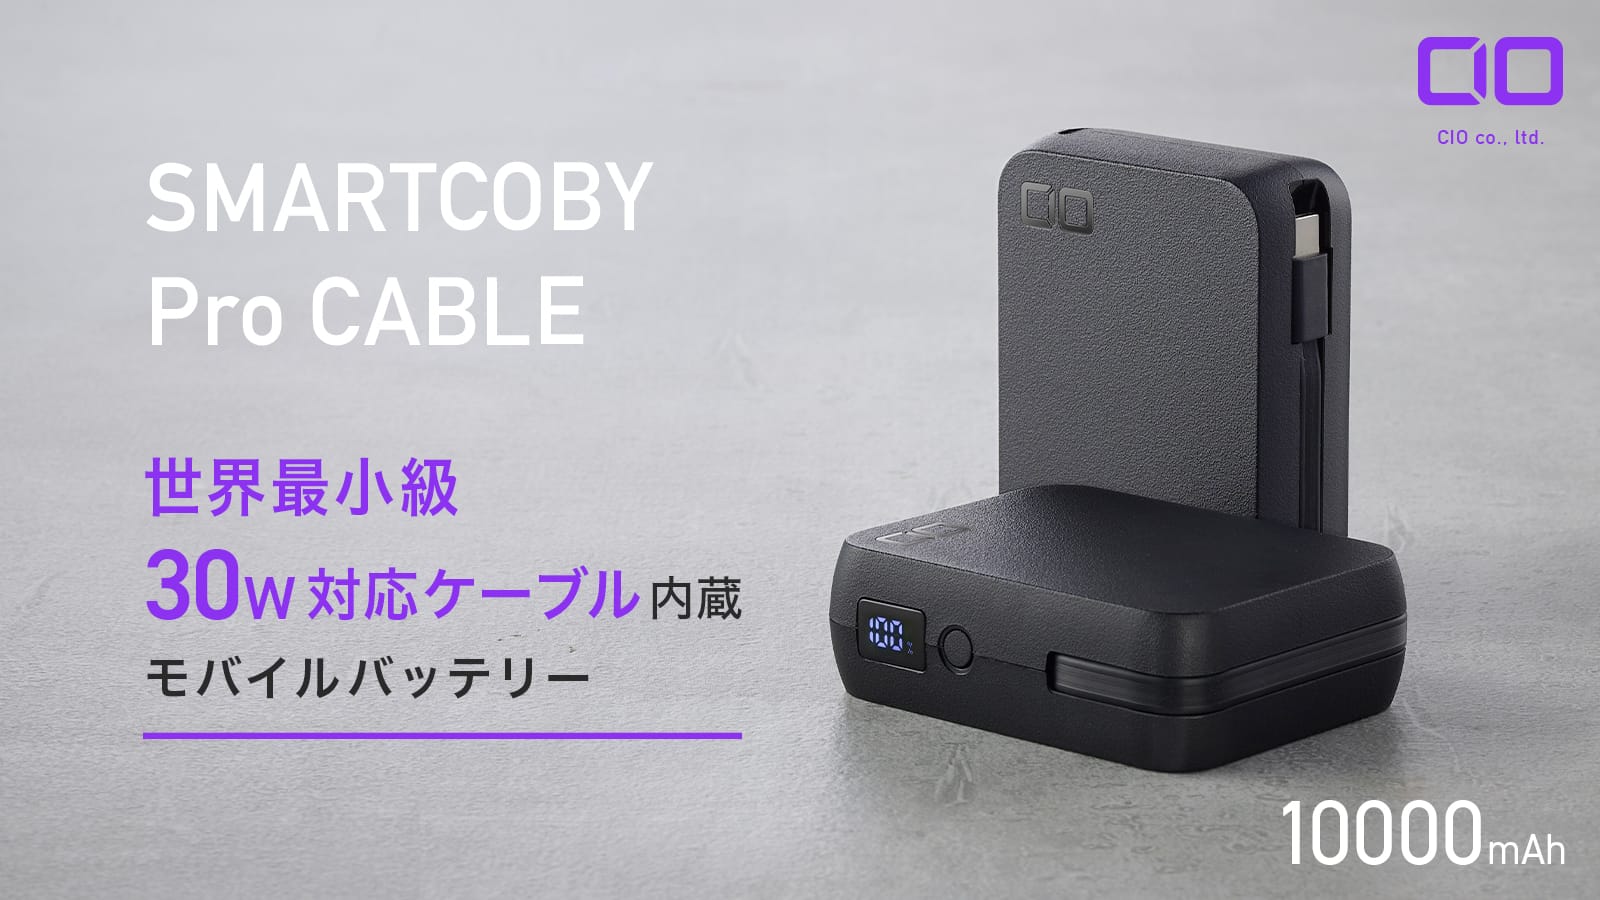 CIO、USB-Cケーブル一体型モバイルバッテリー「SMARTCOBY Pro CABLE」を発売